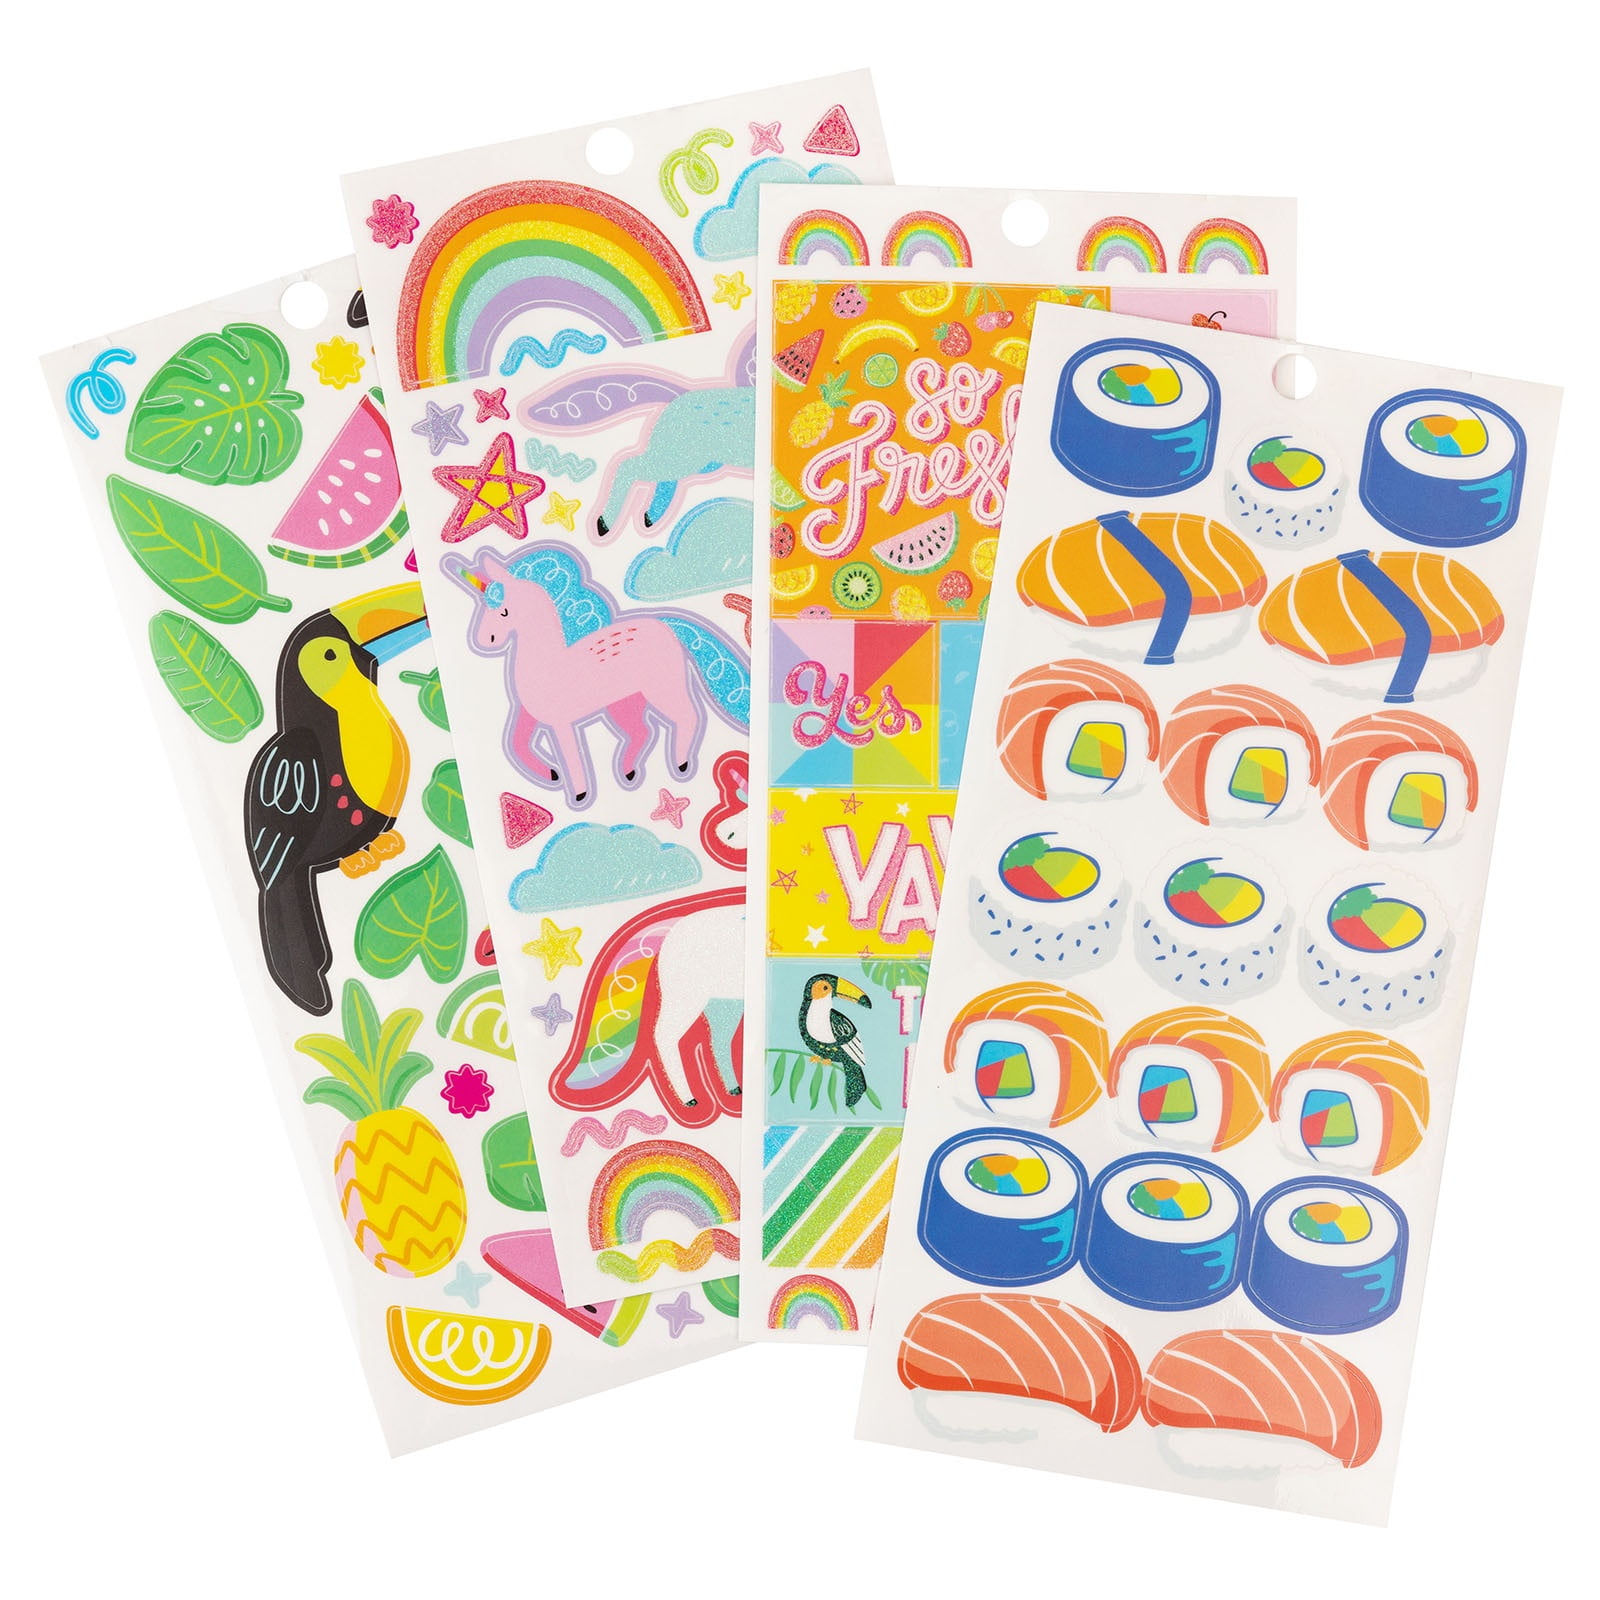 AoneFun Scrapbook Kit for Girls - Scrapbook for Kids Scrapbook Stickers for Best Friend Scrapbook - Girly Sticker Pack - Friends Stickers, 3 Packs